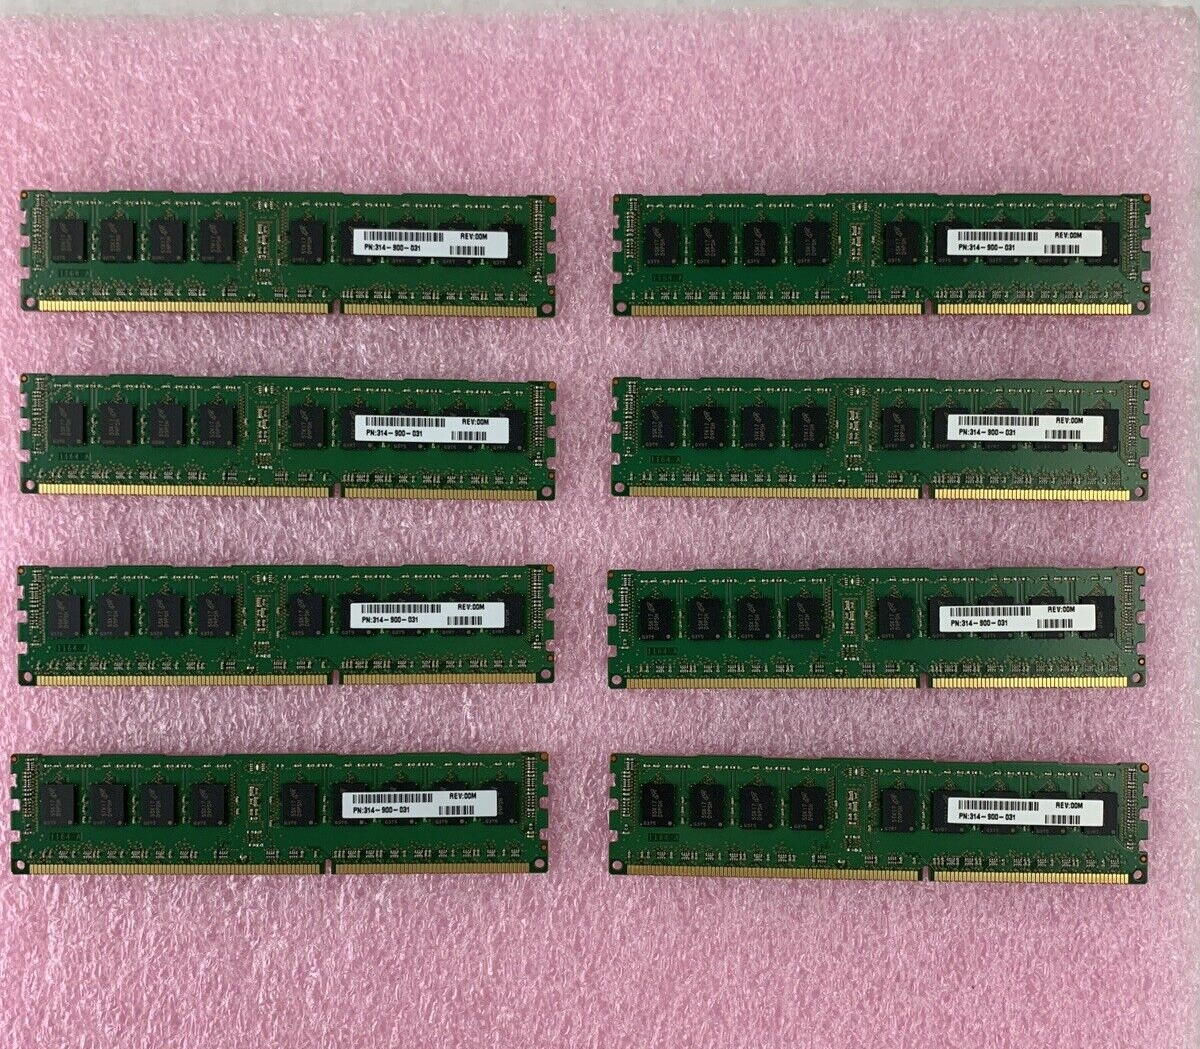 Lot of 8 Micron 4GB PC3-12800R DDR3 ECC SERVER RAM MT18JSF51272PDZ-1G6K1HE